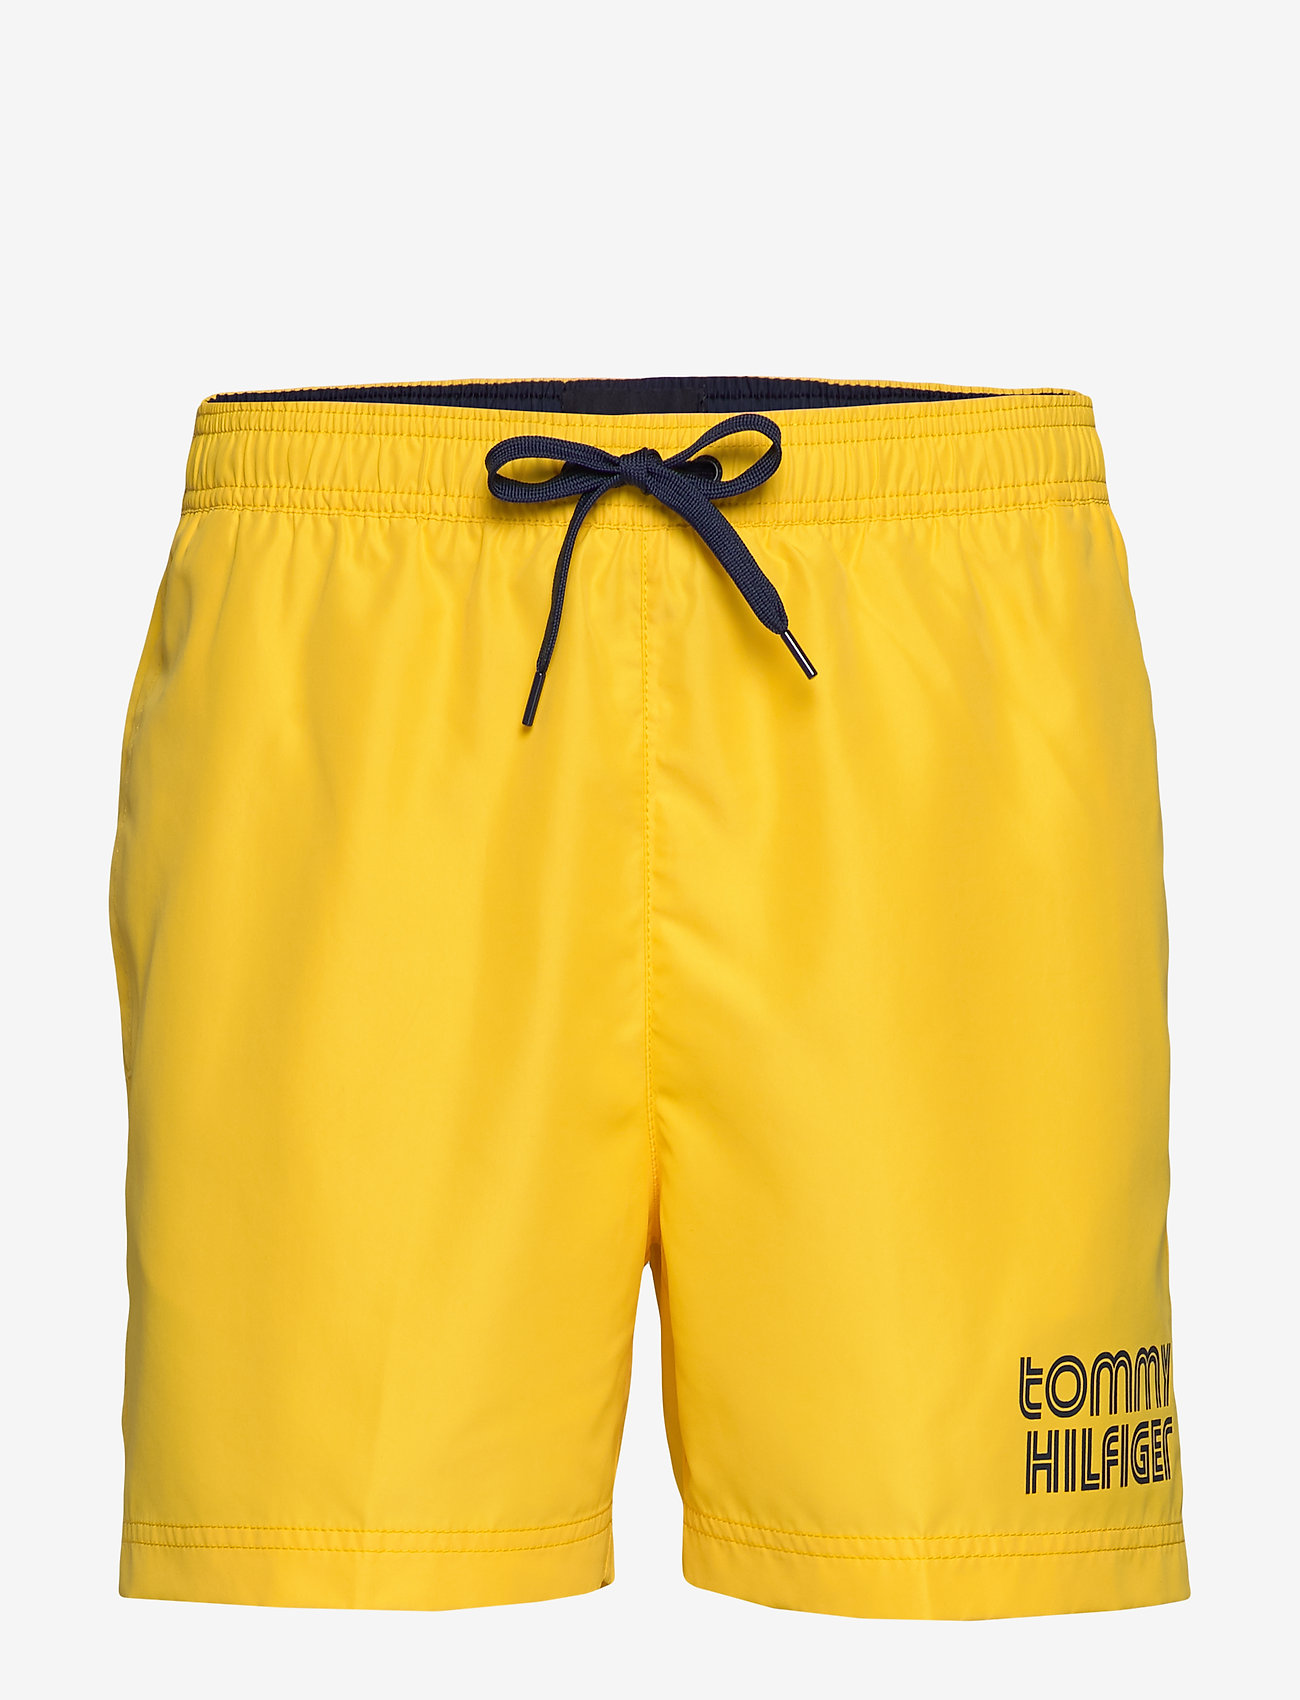 yellow tommy hilfiger swim trunks